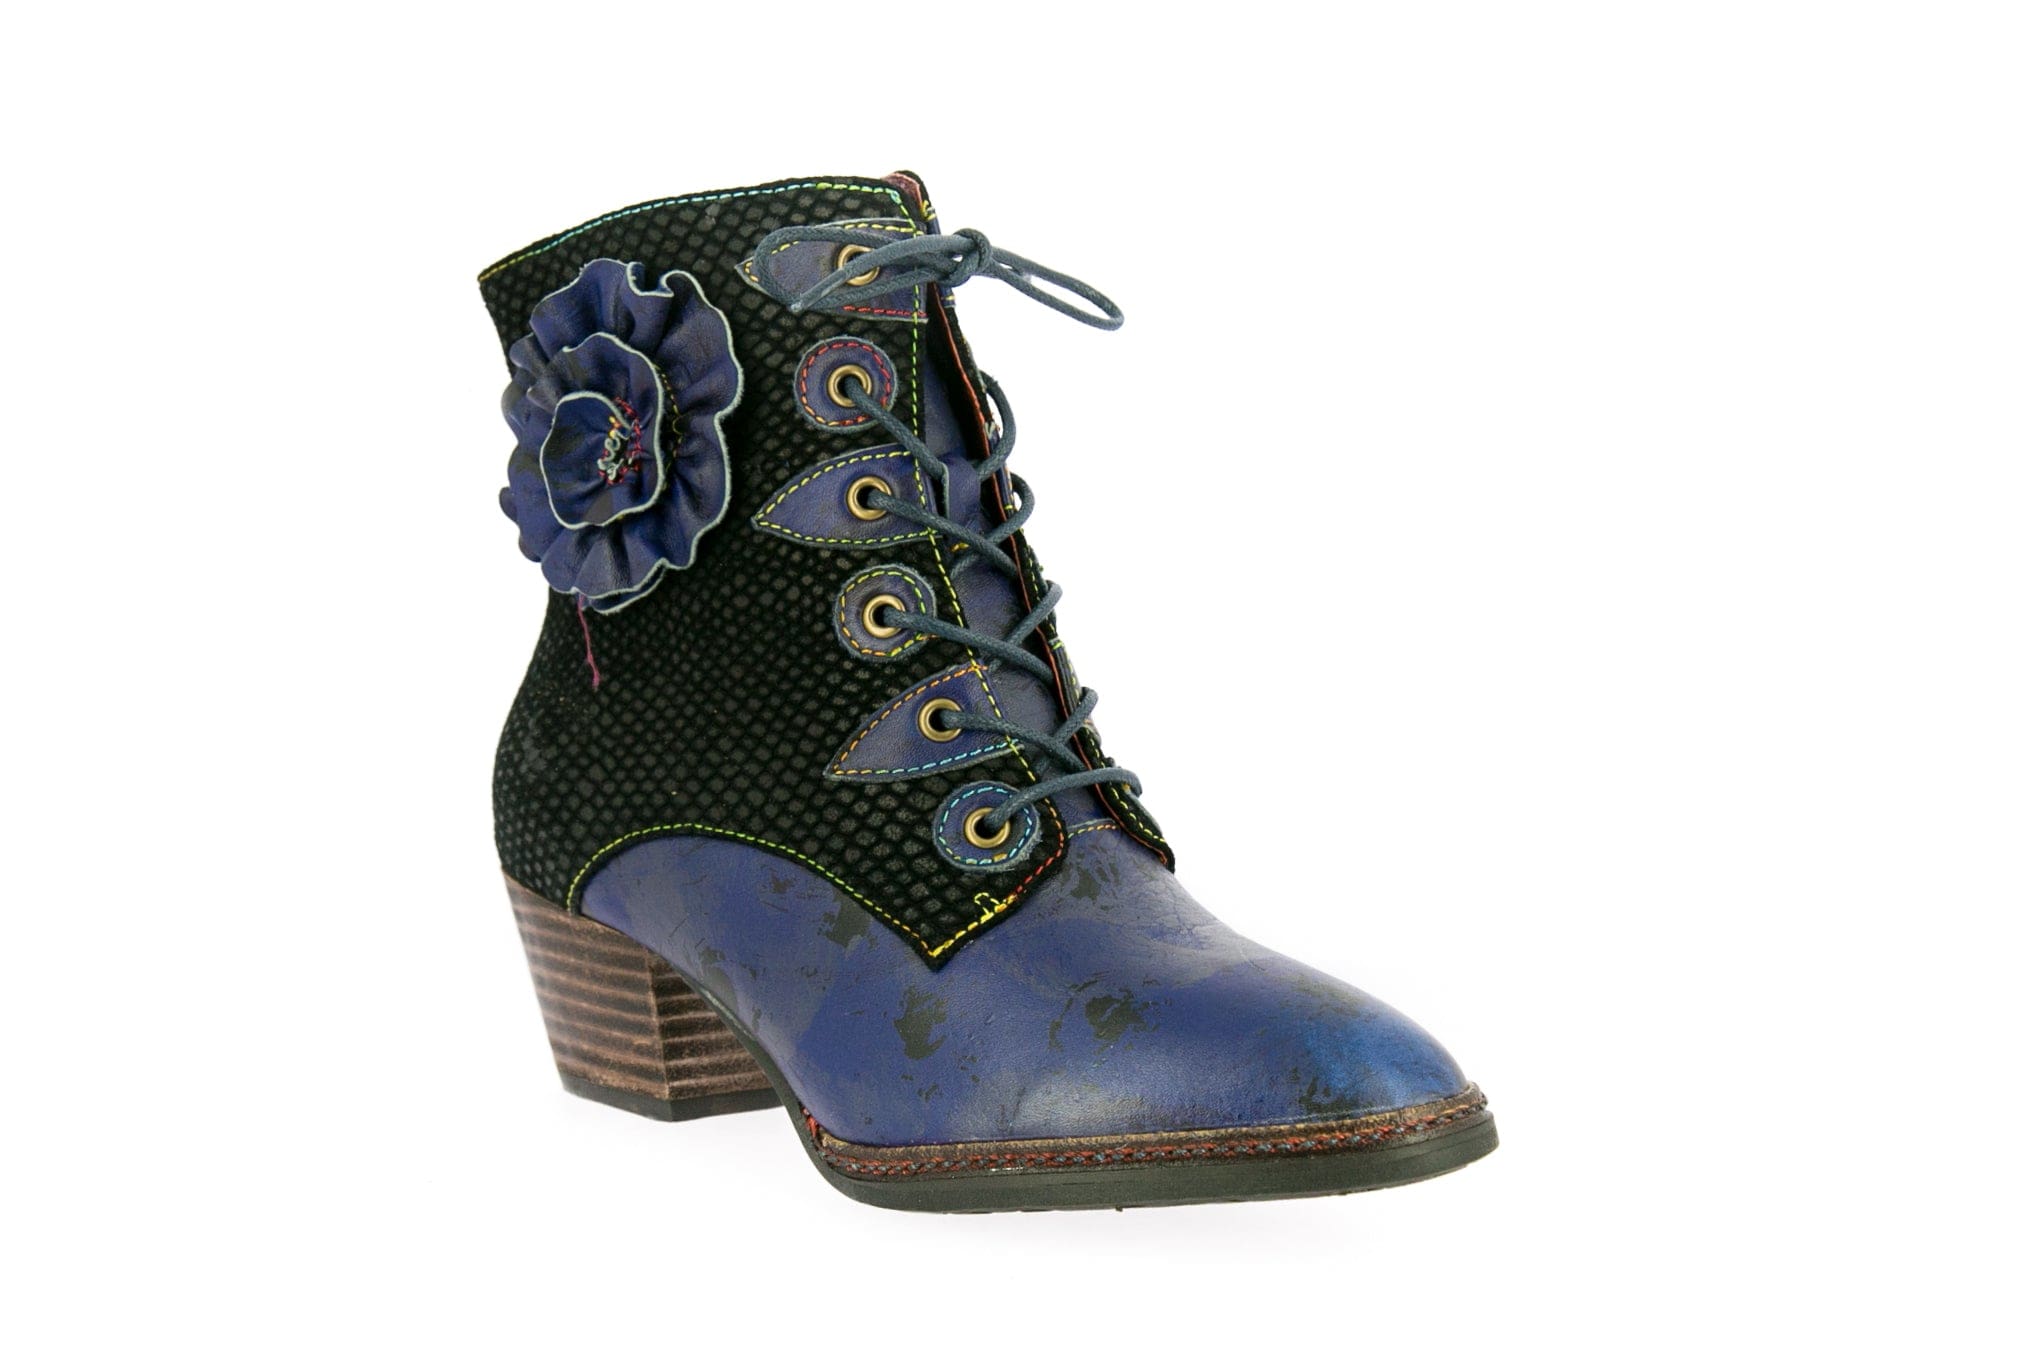 CLARA 11 schoenen - 37 / Blauw - Laarzen